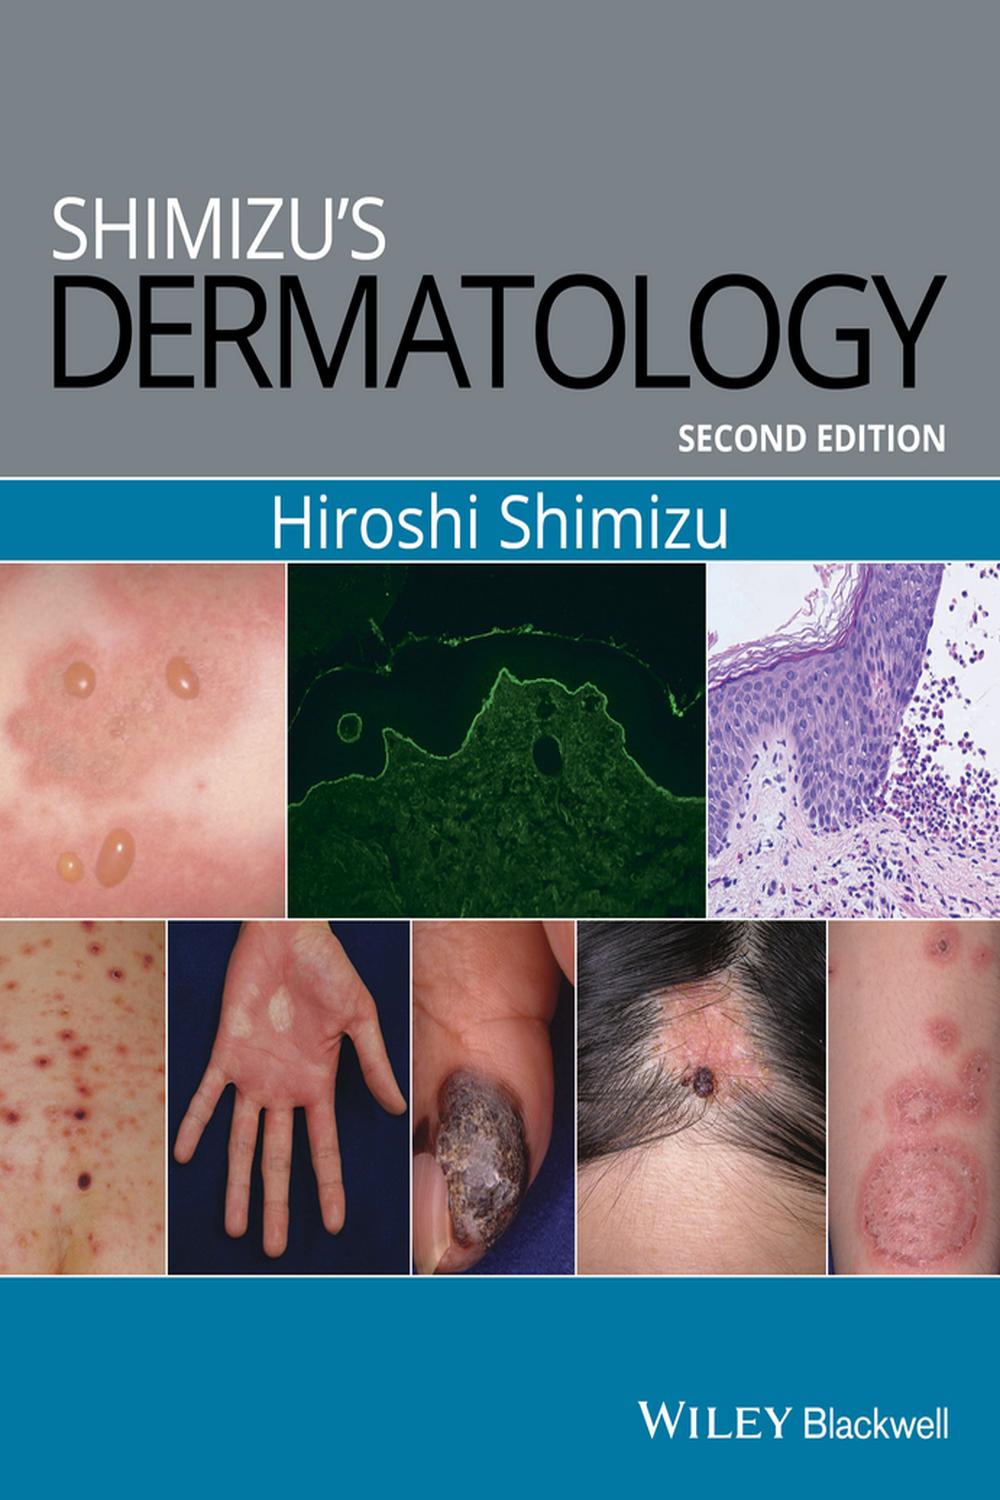 PDF] Shimizu's Dermatology by Hiroshi Shimizu eBook | Perlego